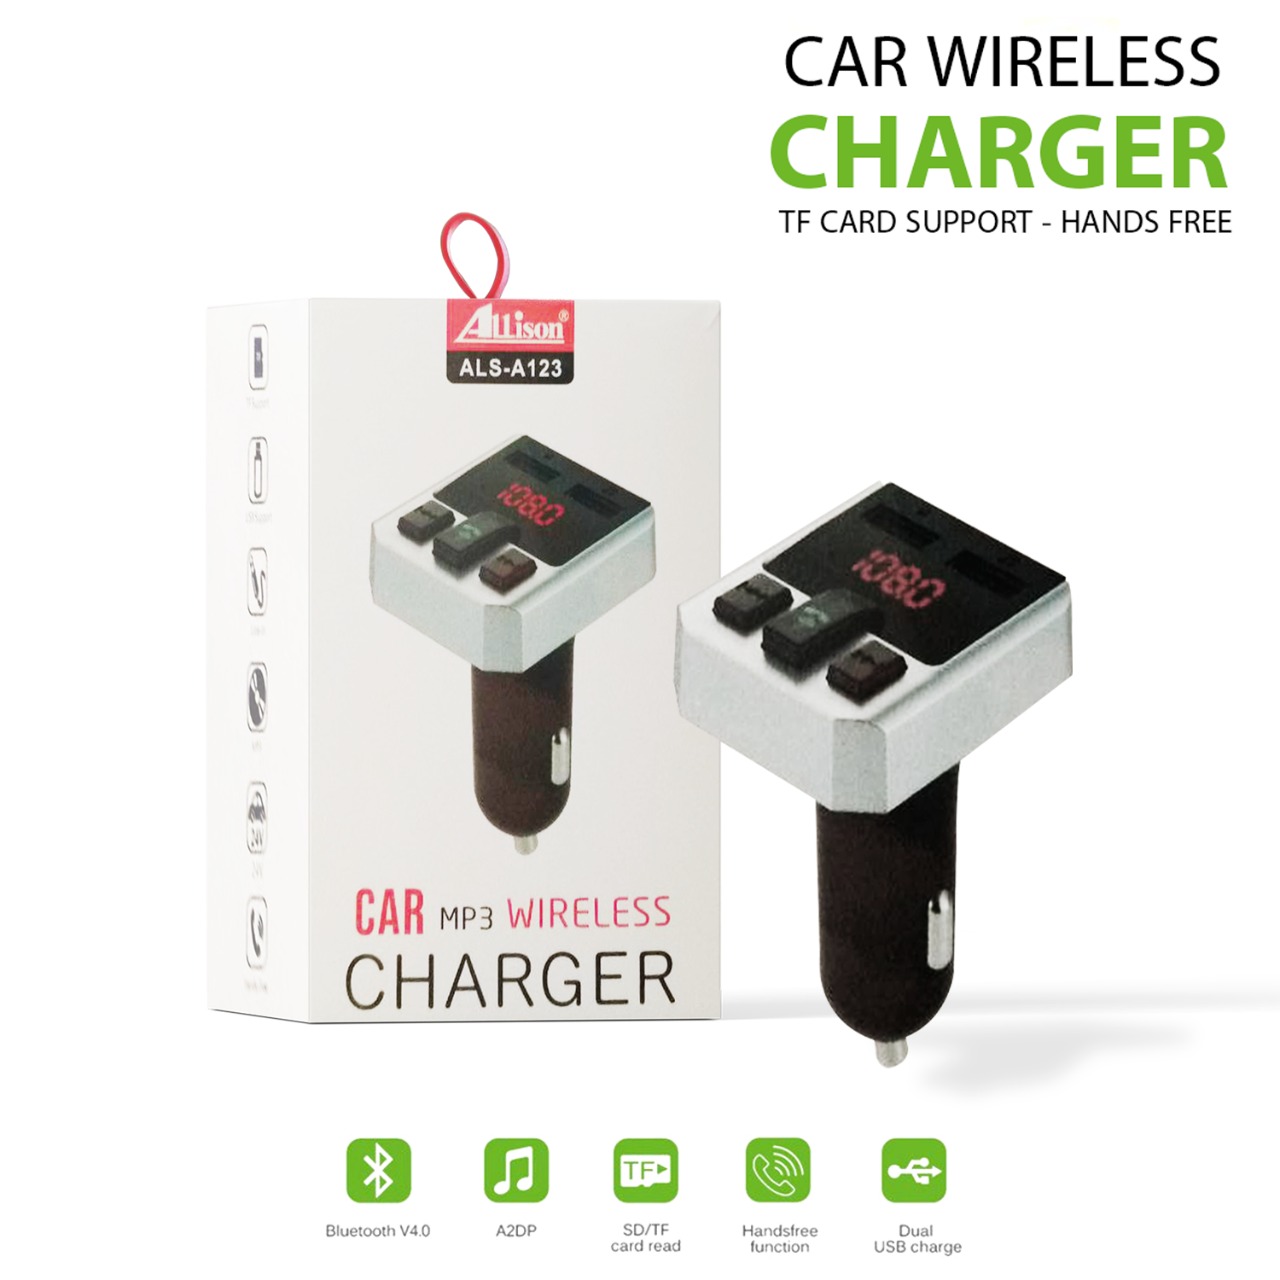 Allison ALS-A123 Car MP3 Wireless Charger